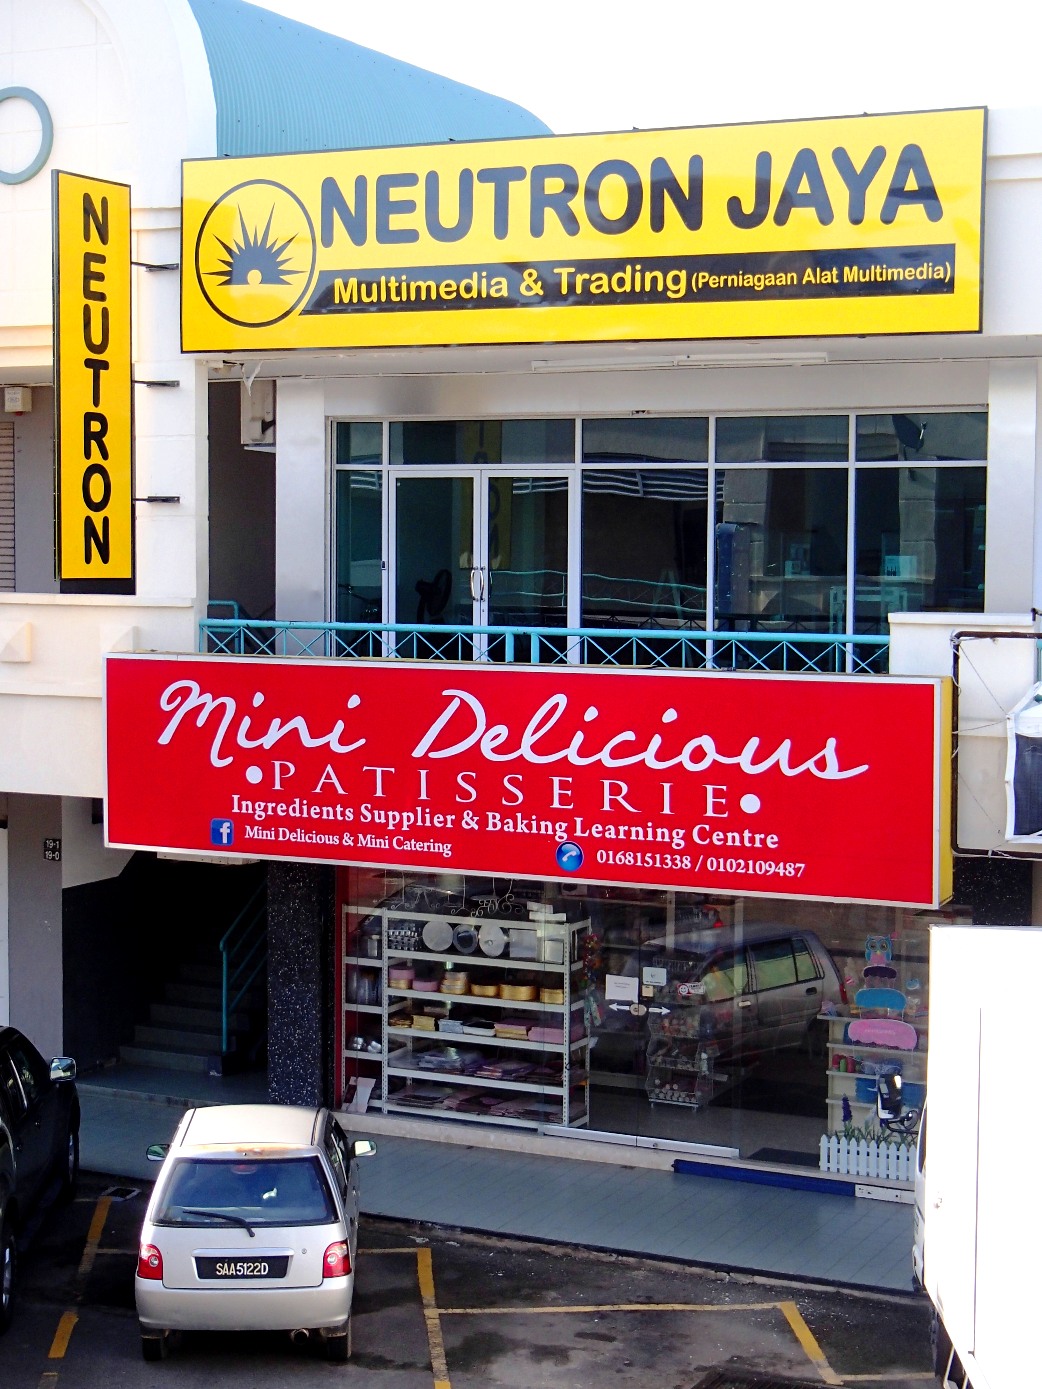 Neutron Jaya Multimedia & Trading